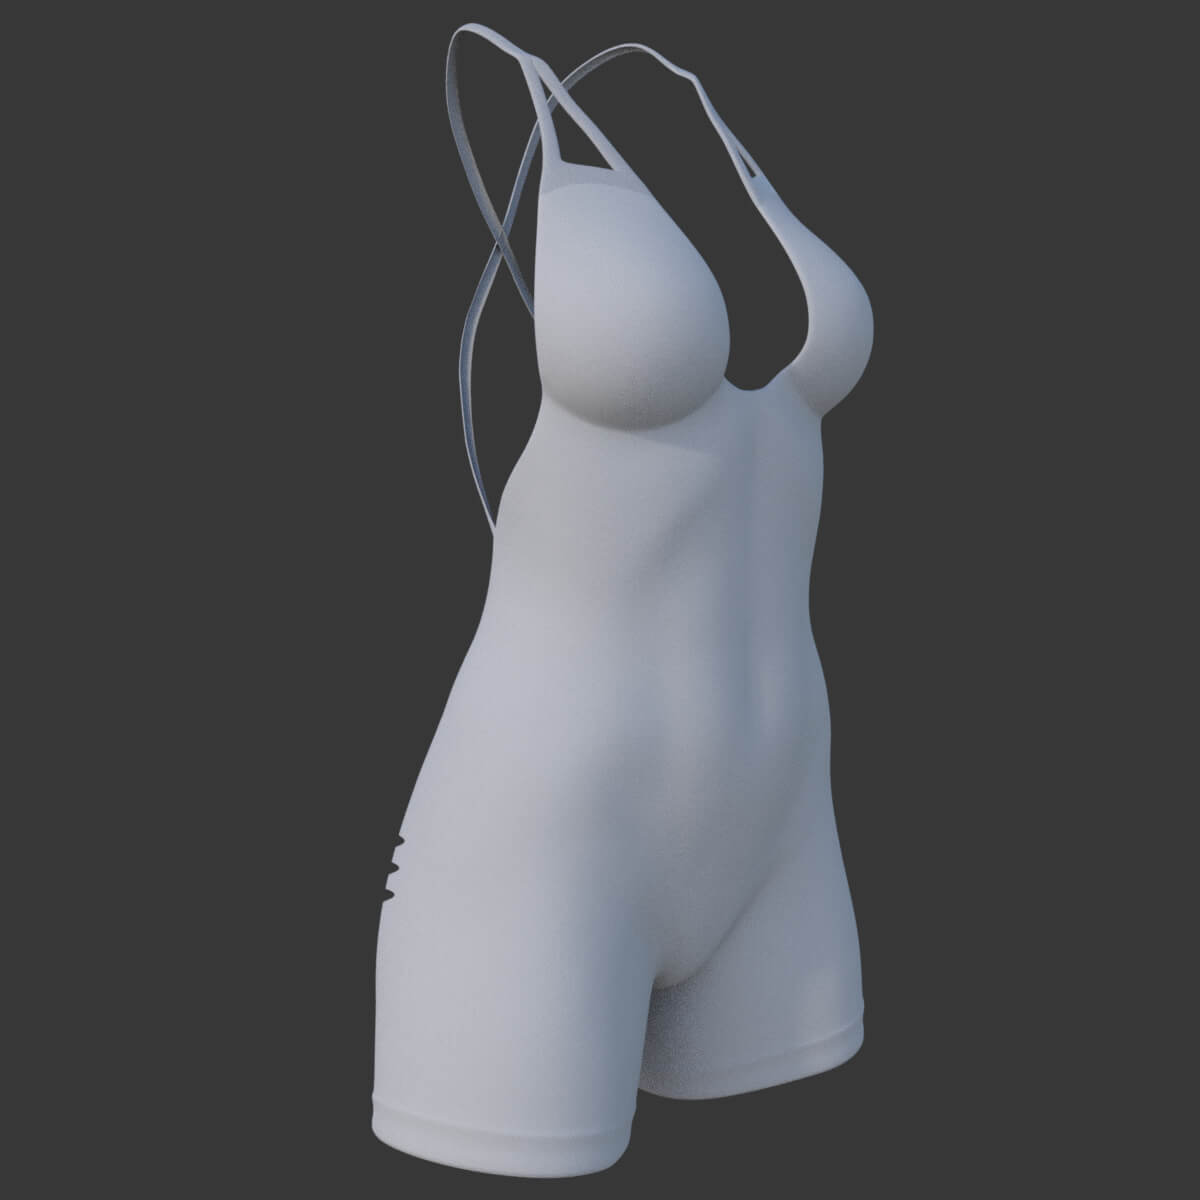 Faxhion - JMR dForce Ariel Underwear 3D Figure Assets vyktohria